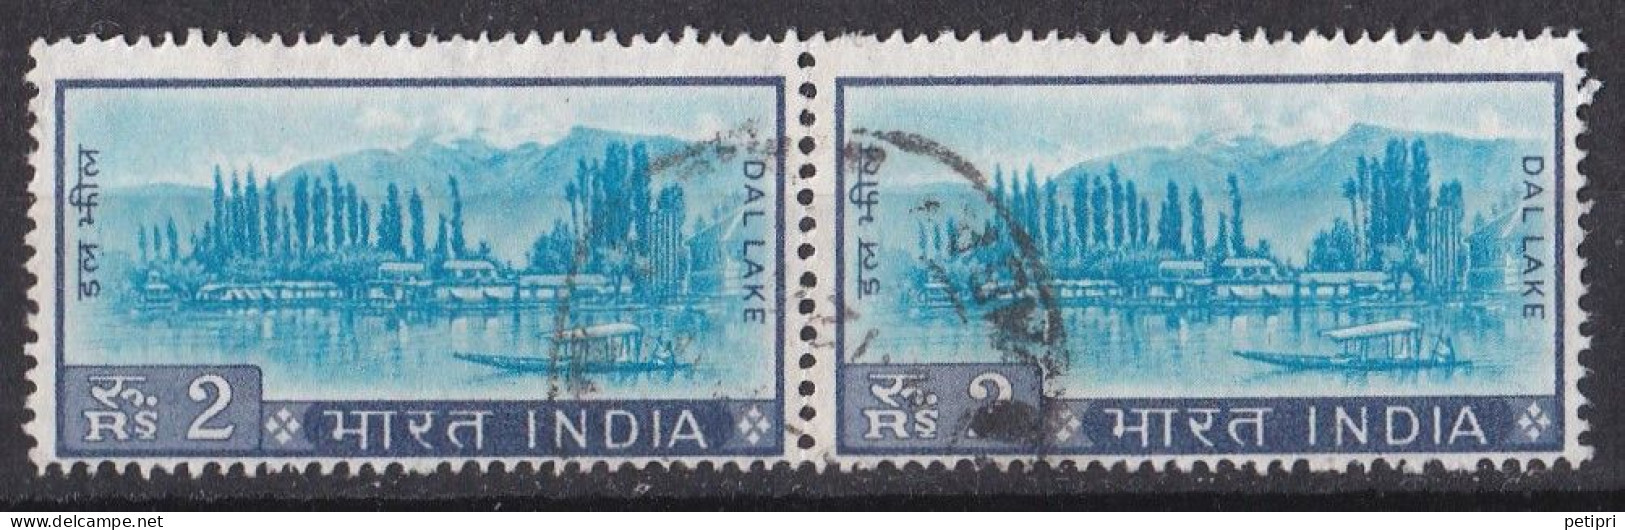 Inde  - 1960  1969 -   Y&T  N °  231  Paire Oblitérée - Usados